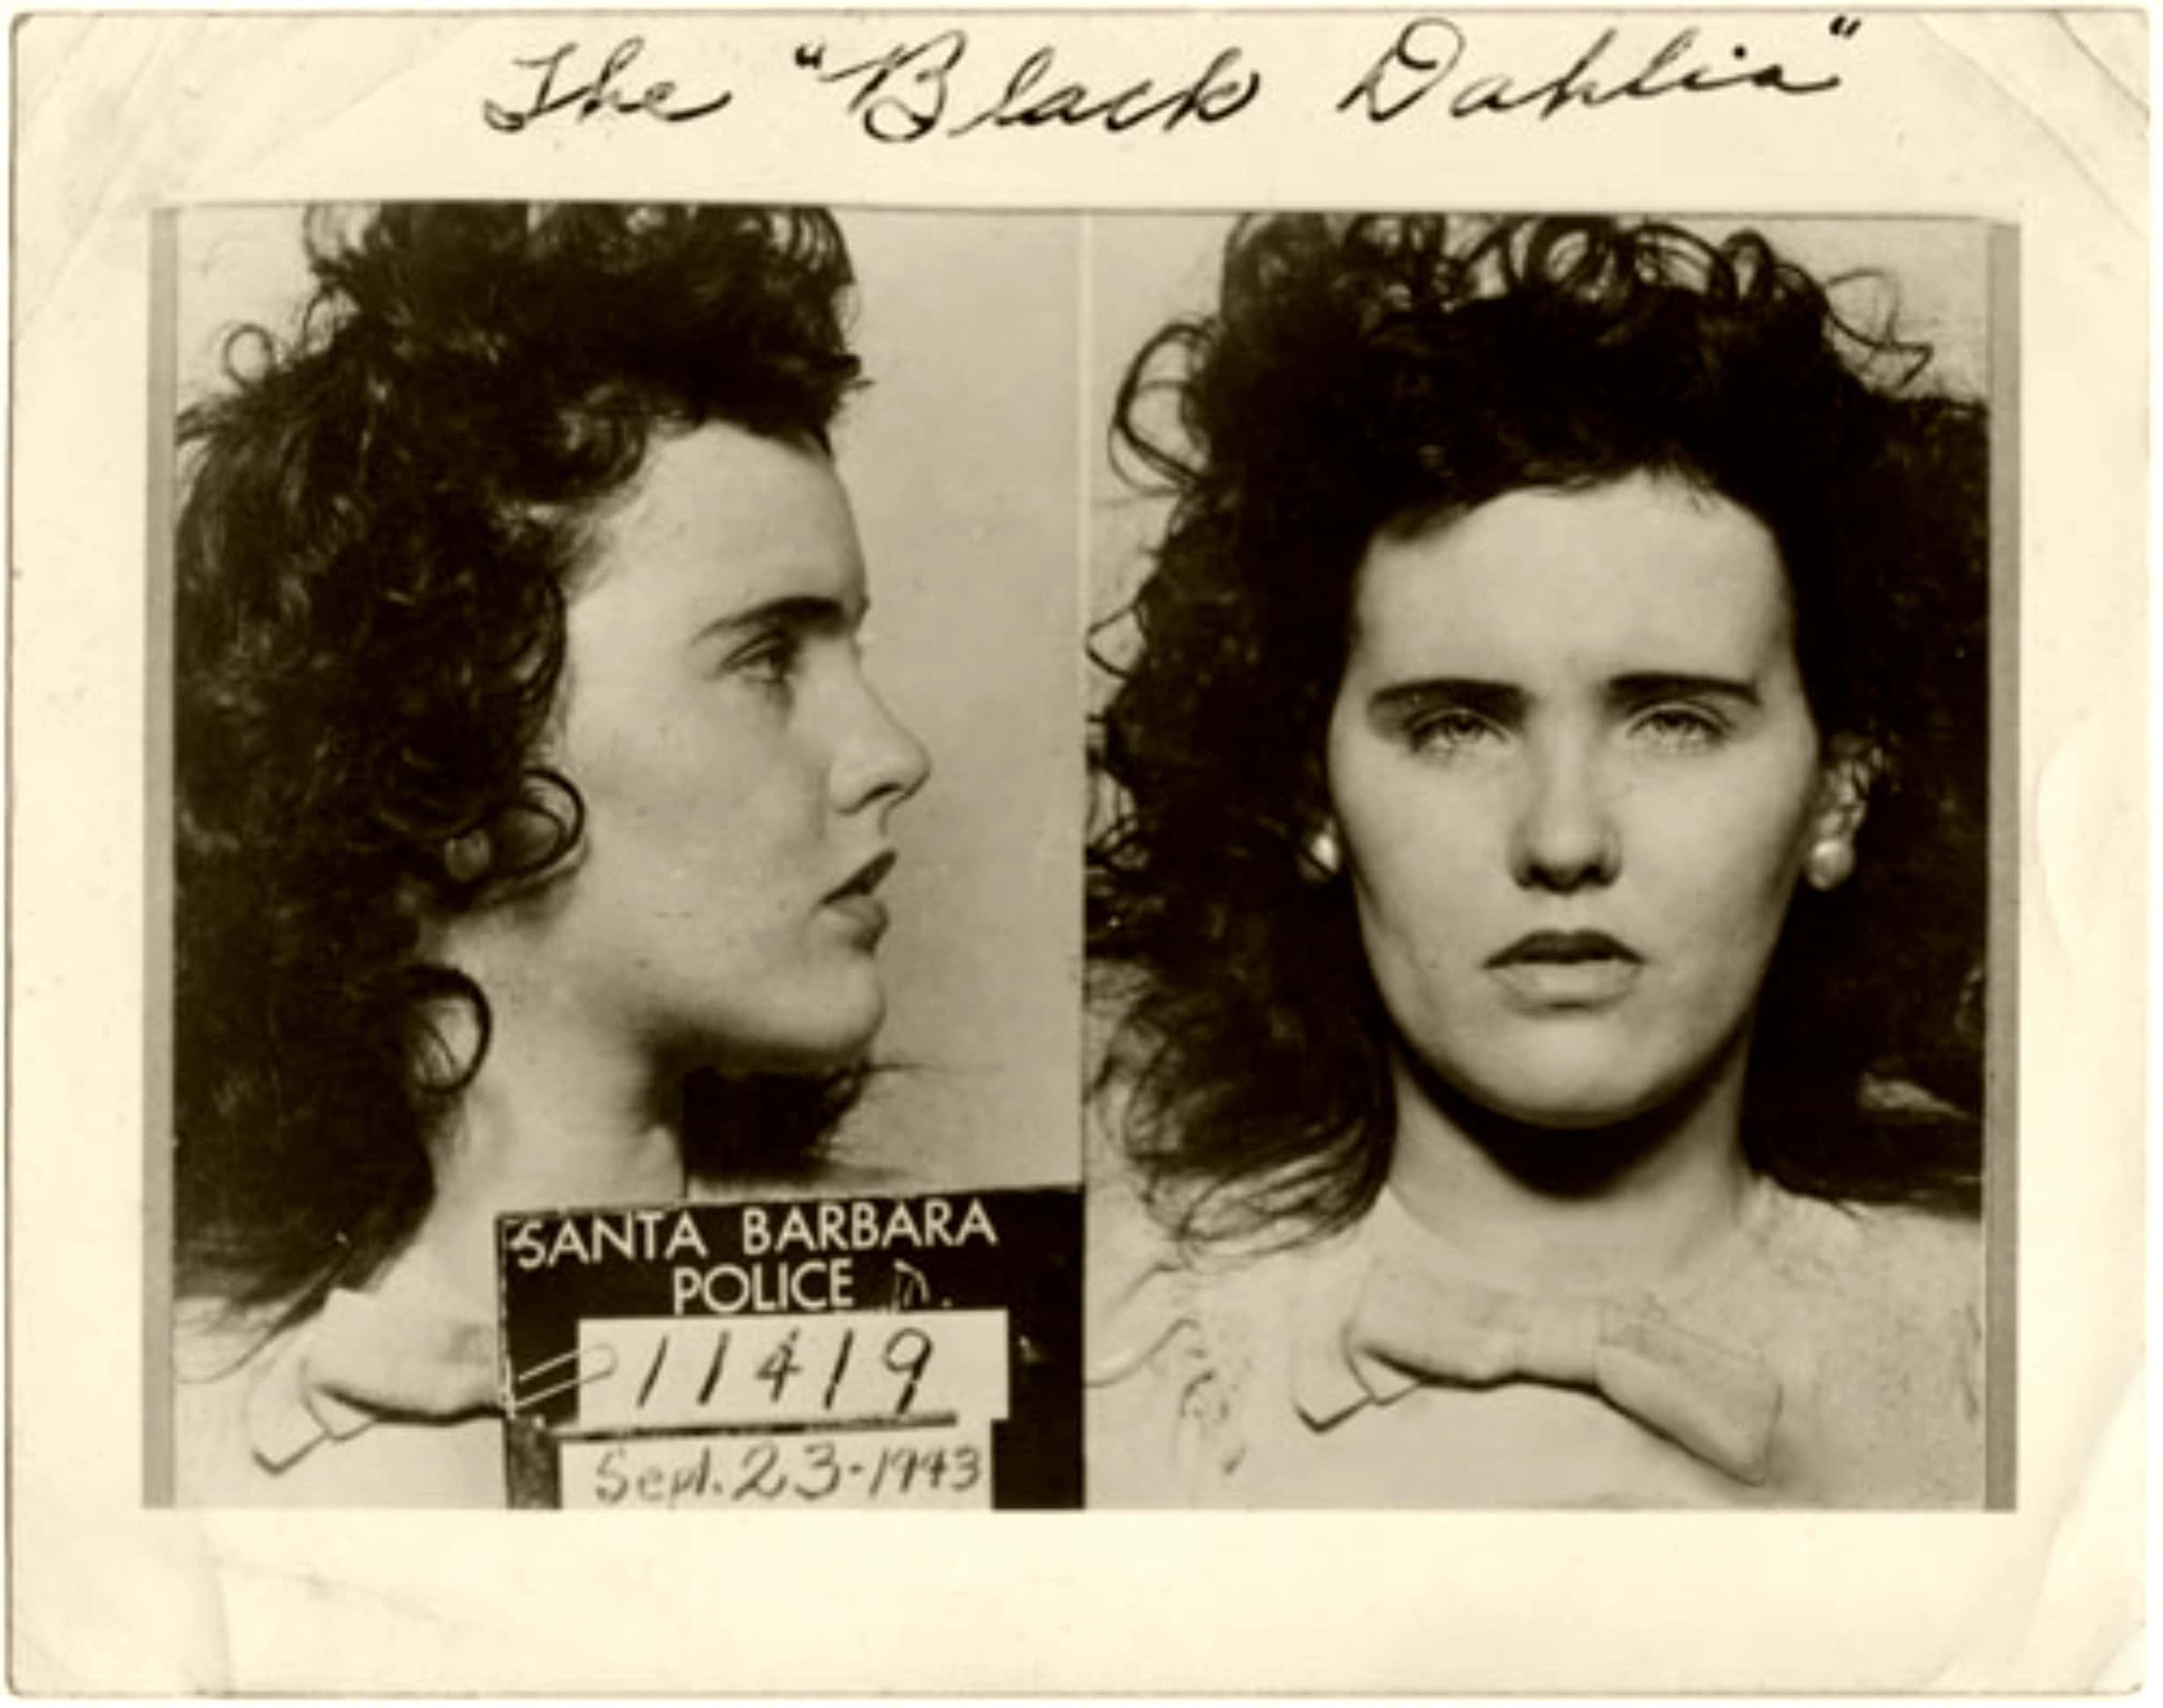 Elizabeth Short, The Black Dahlia facts